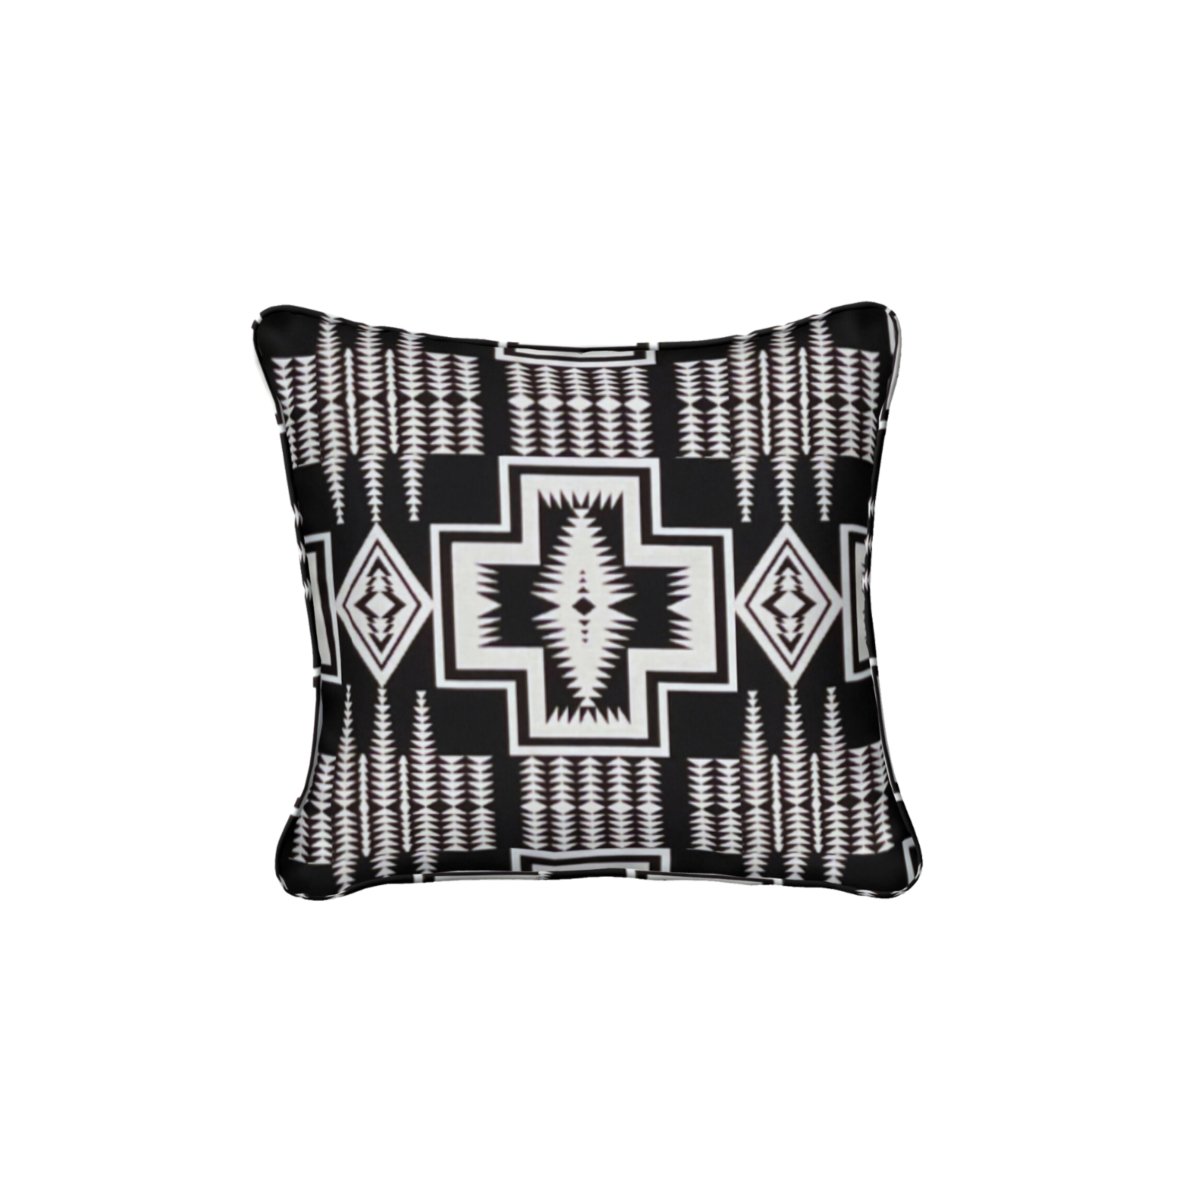 Flagstaff Welted Outdoor Pillow | Pendleton by Sunbrella - Outward Decor